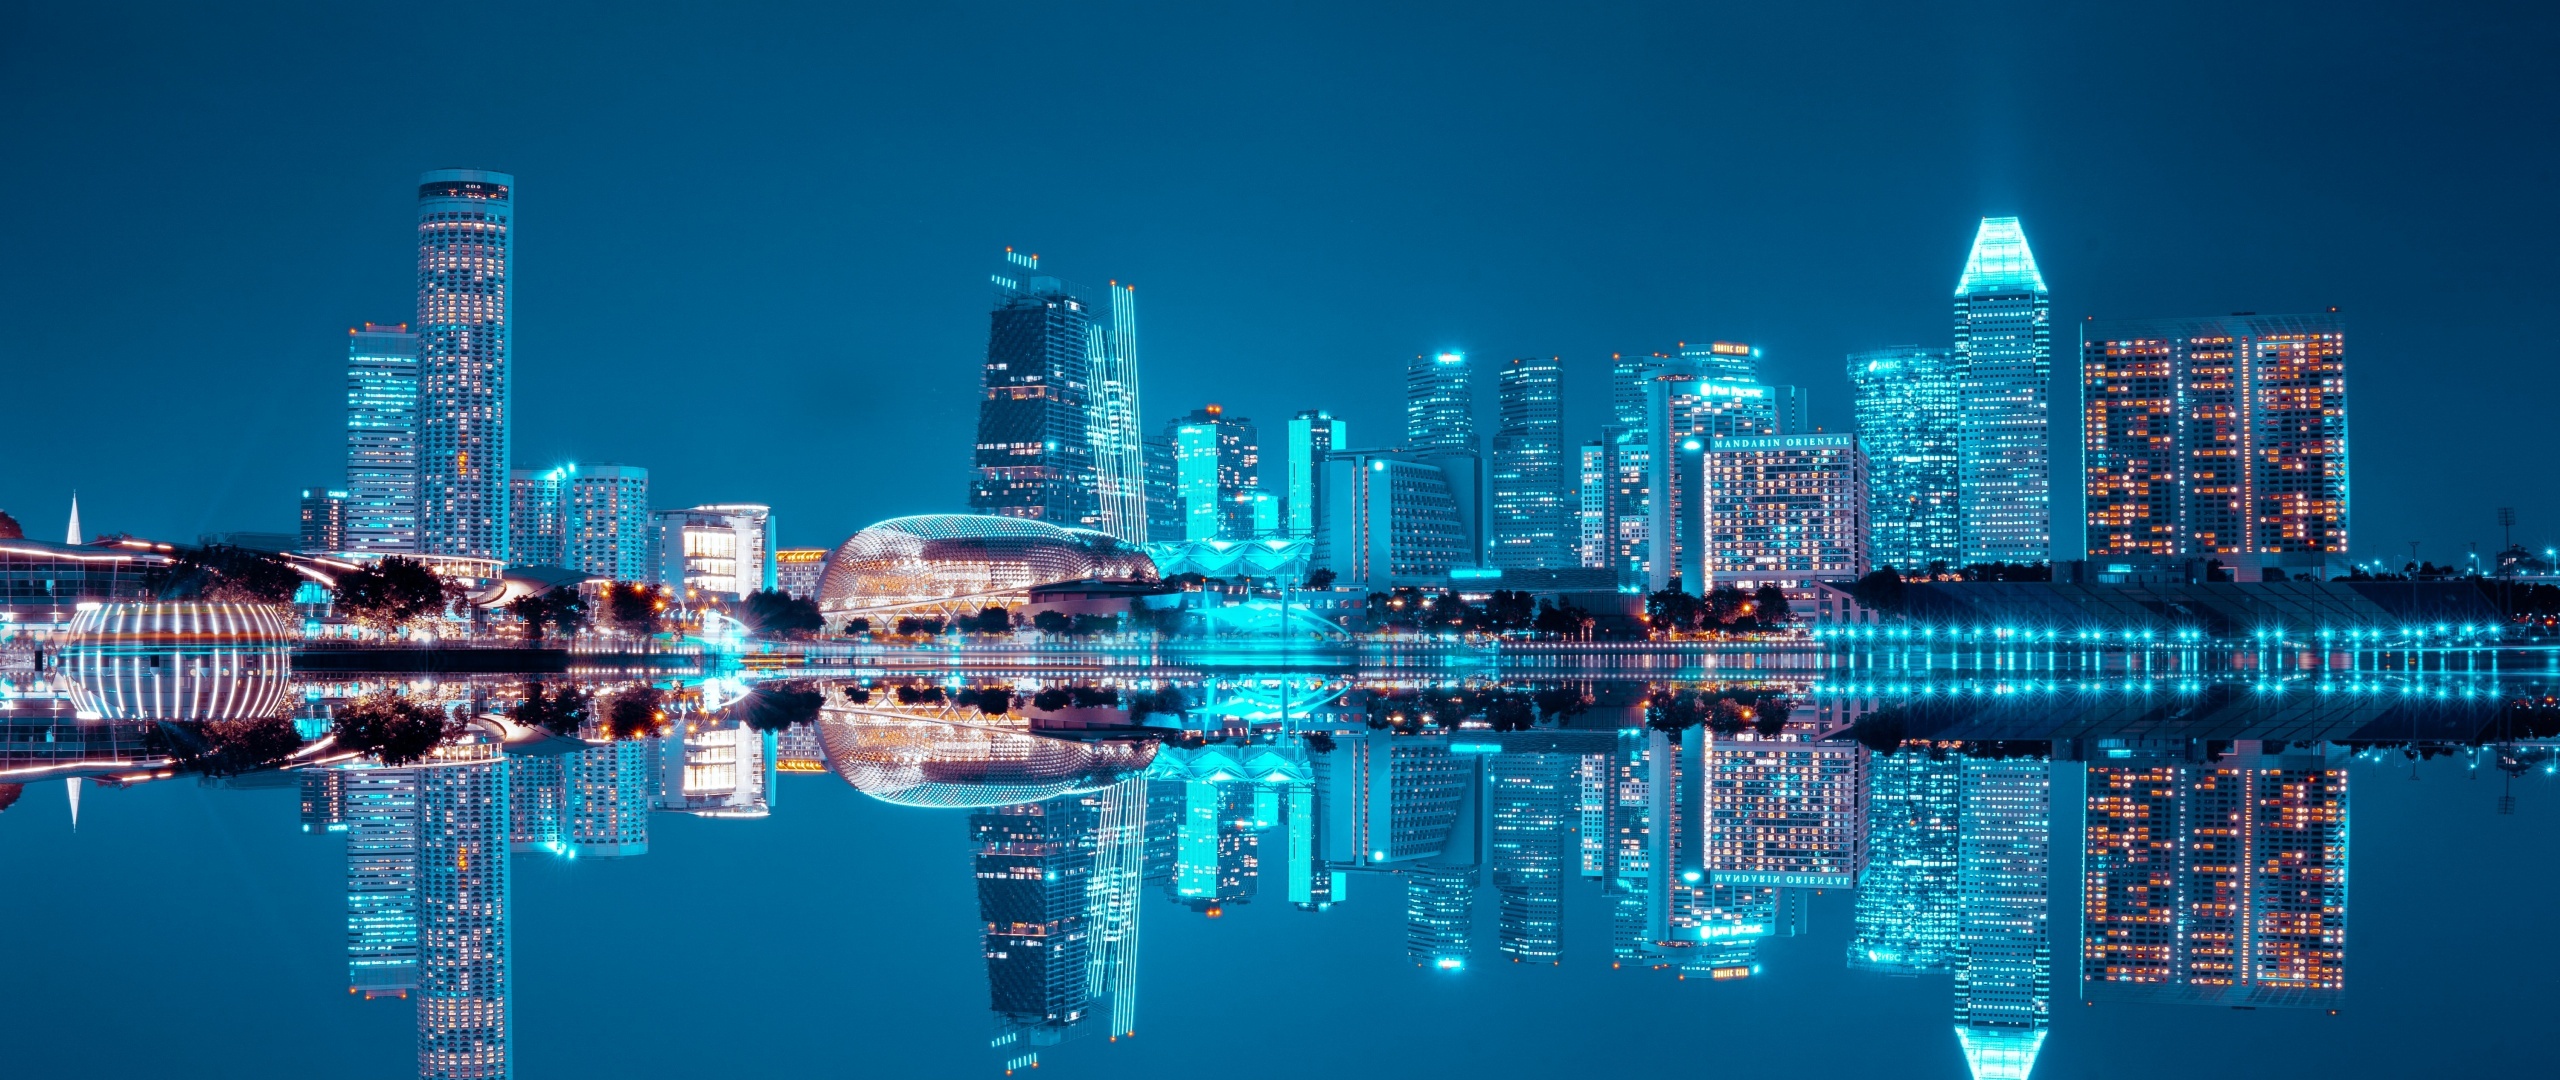 Singapore Skyline, Cityscape beauty, Blue hour wonder, Nightlife charm, 2560x1080 Dual Screen Desktop